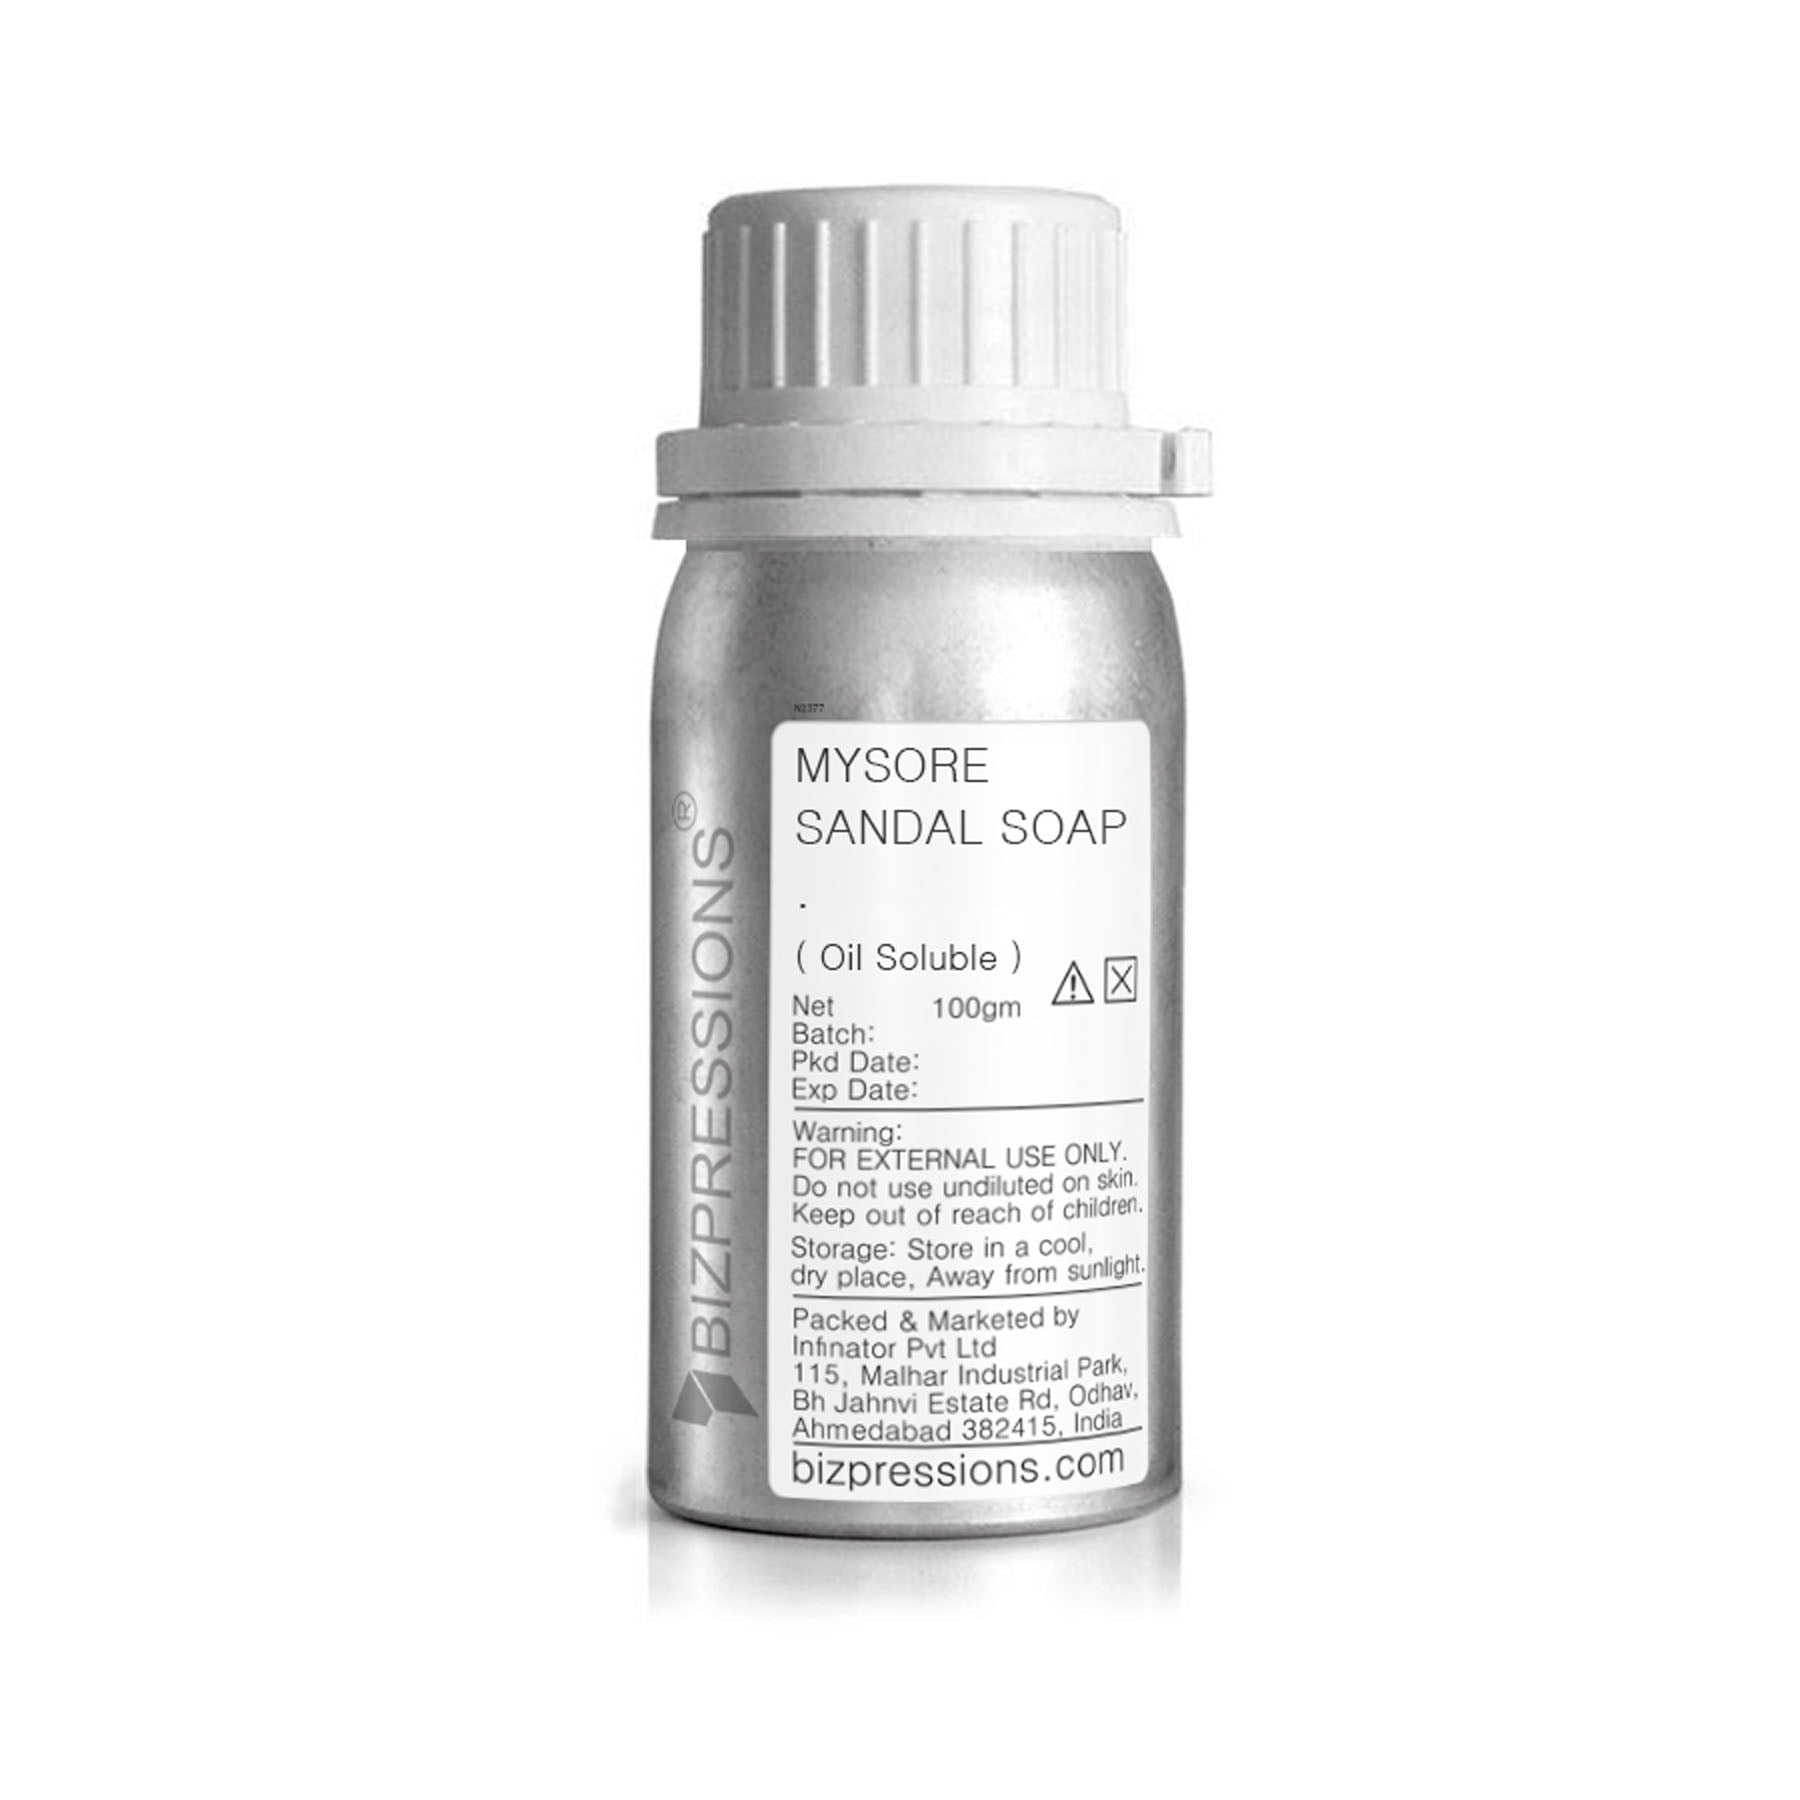 MYSORE SANDAL SOAP - Fragrance ( Oil Soluble ) - 100 gm